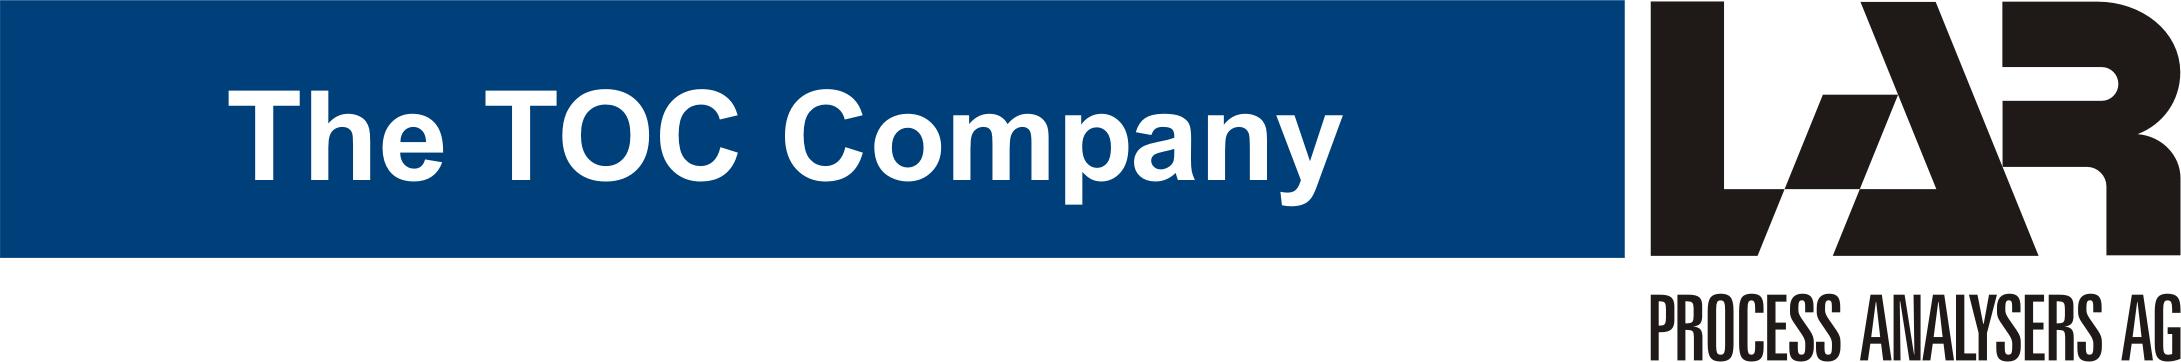 Logo_LAR_The_TOC_Company_300dpi_transparent